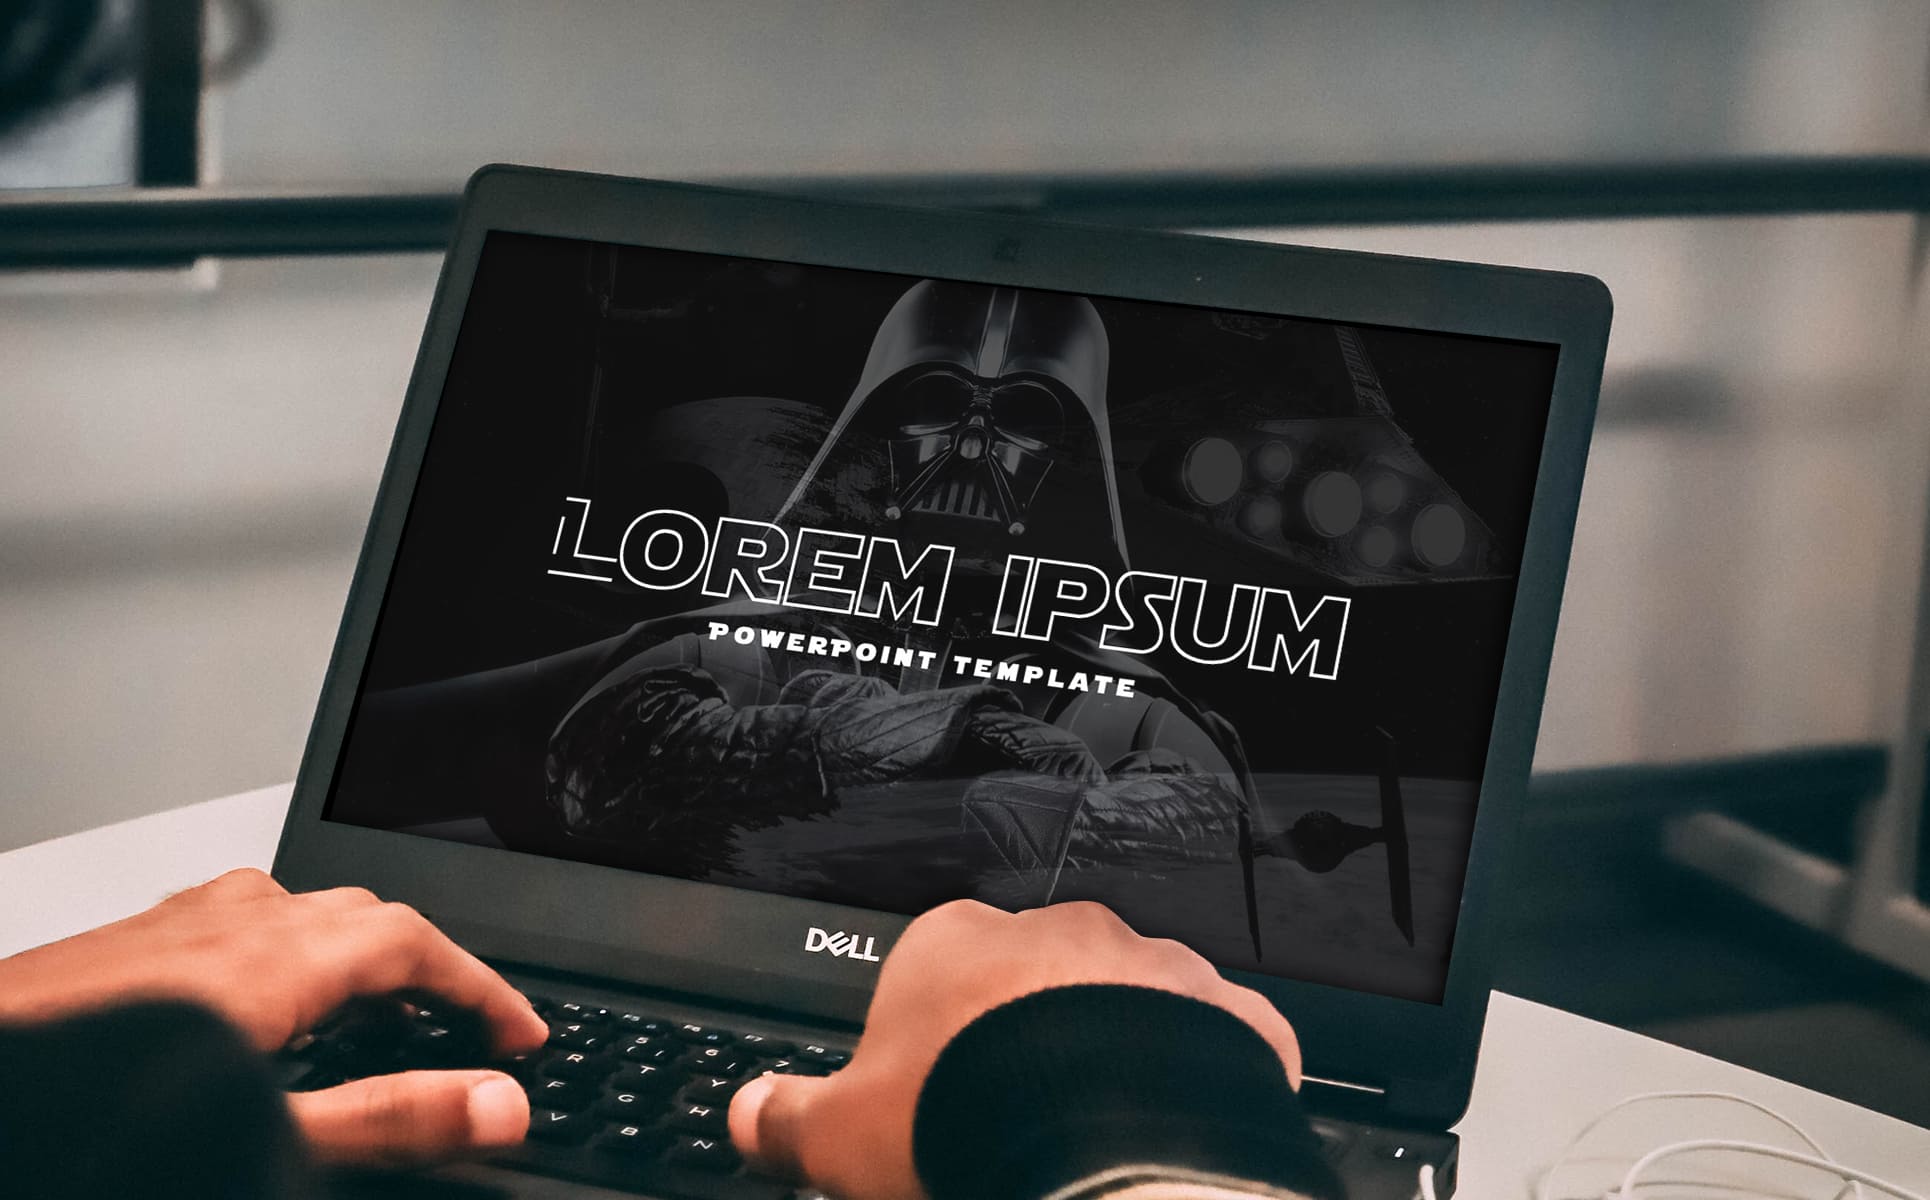 Person working on Star Wars PowerPoint presentation.